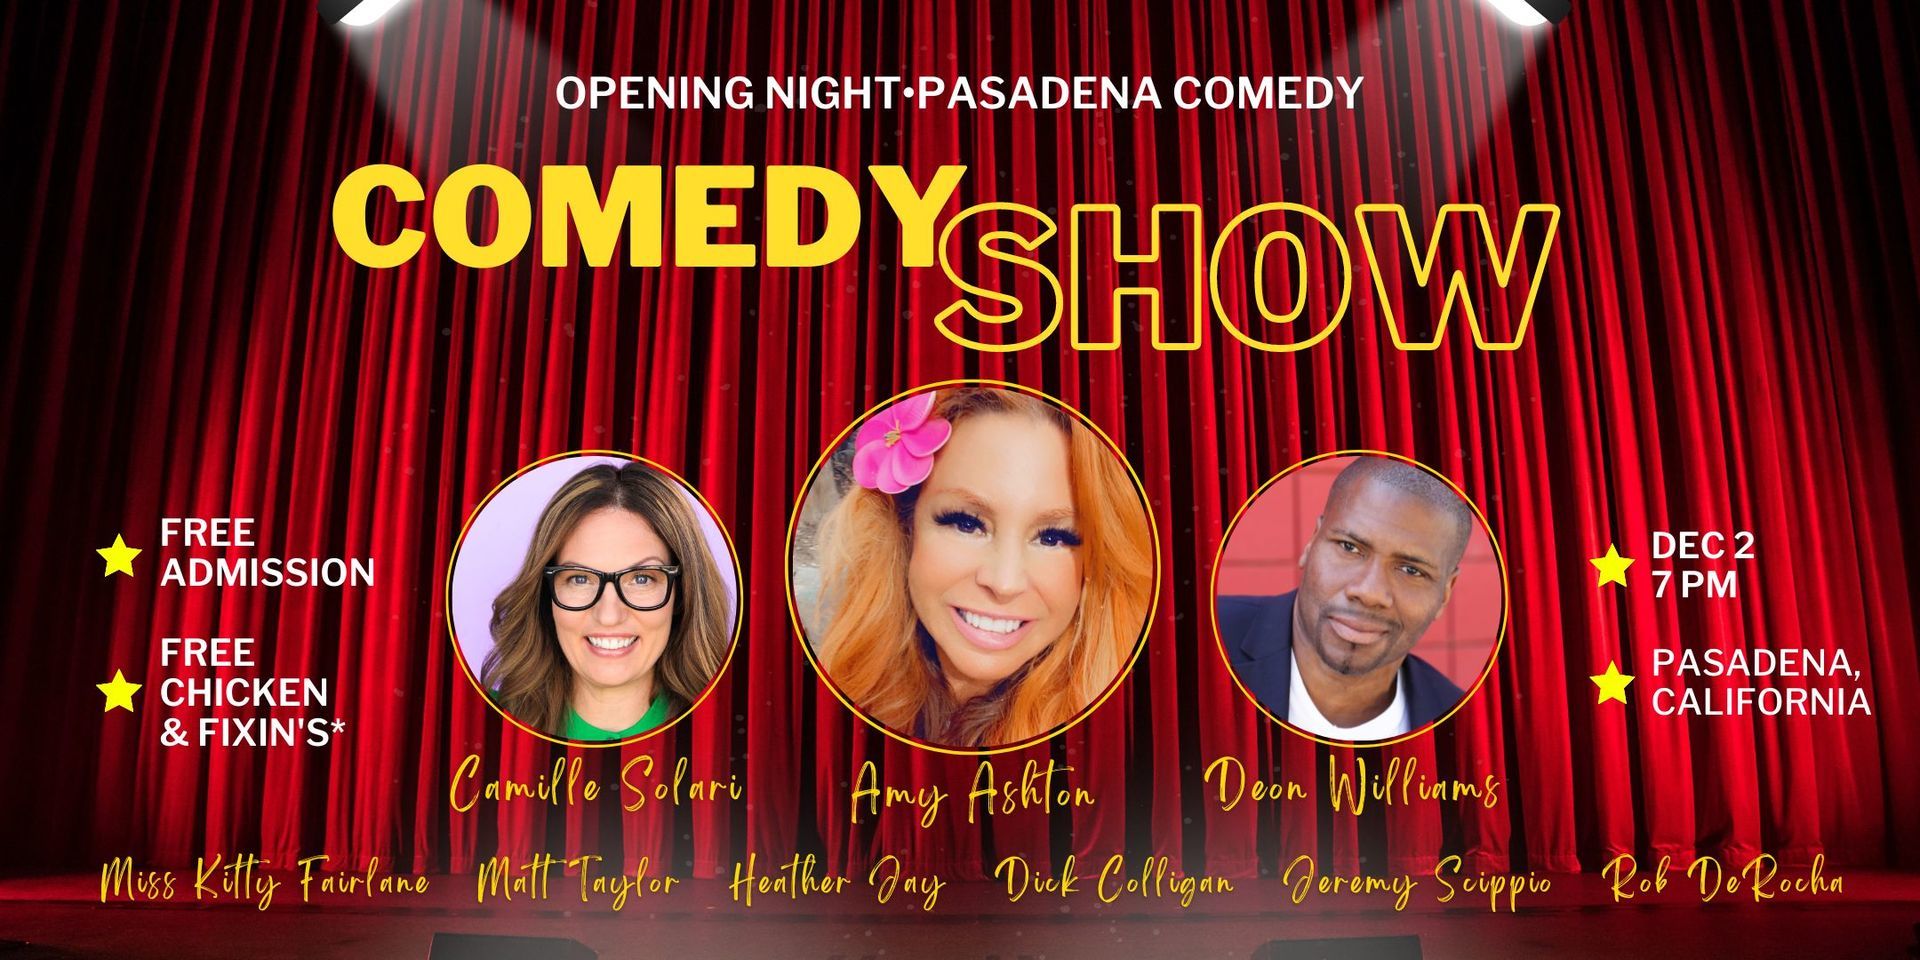 Comedy Show Pasadena Free Admission Fried Chicken, Pasadena, California, United States